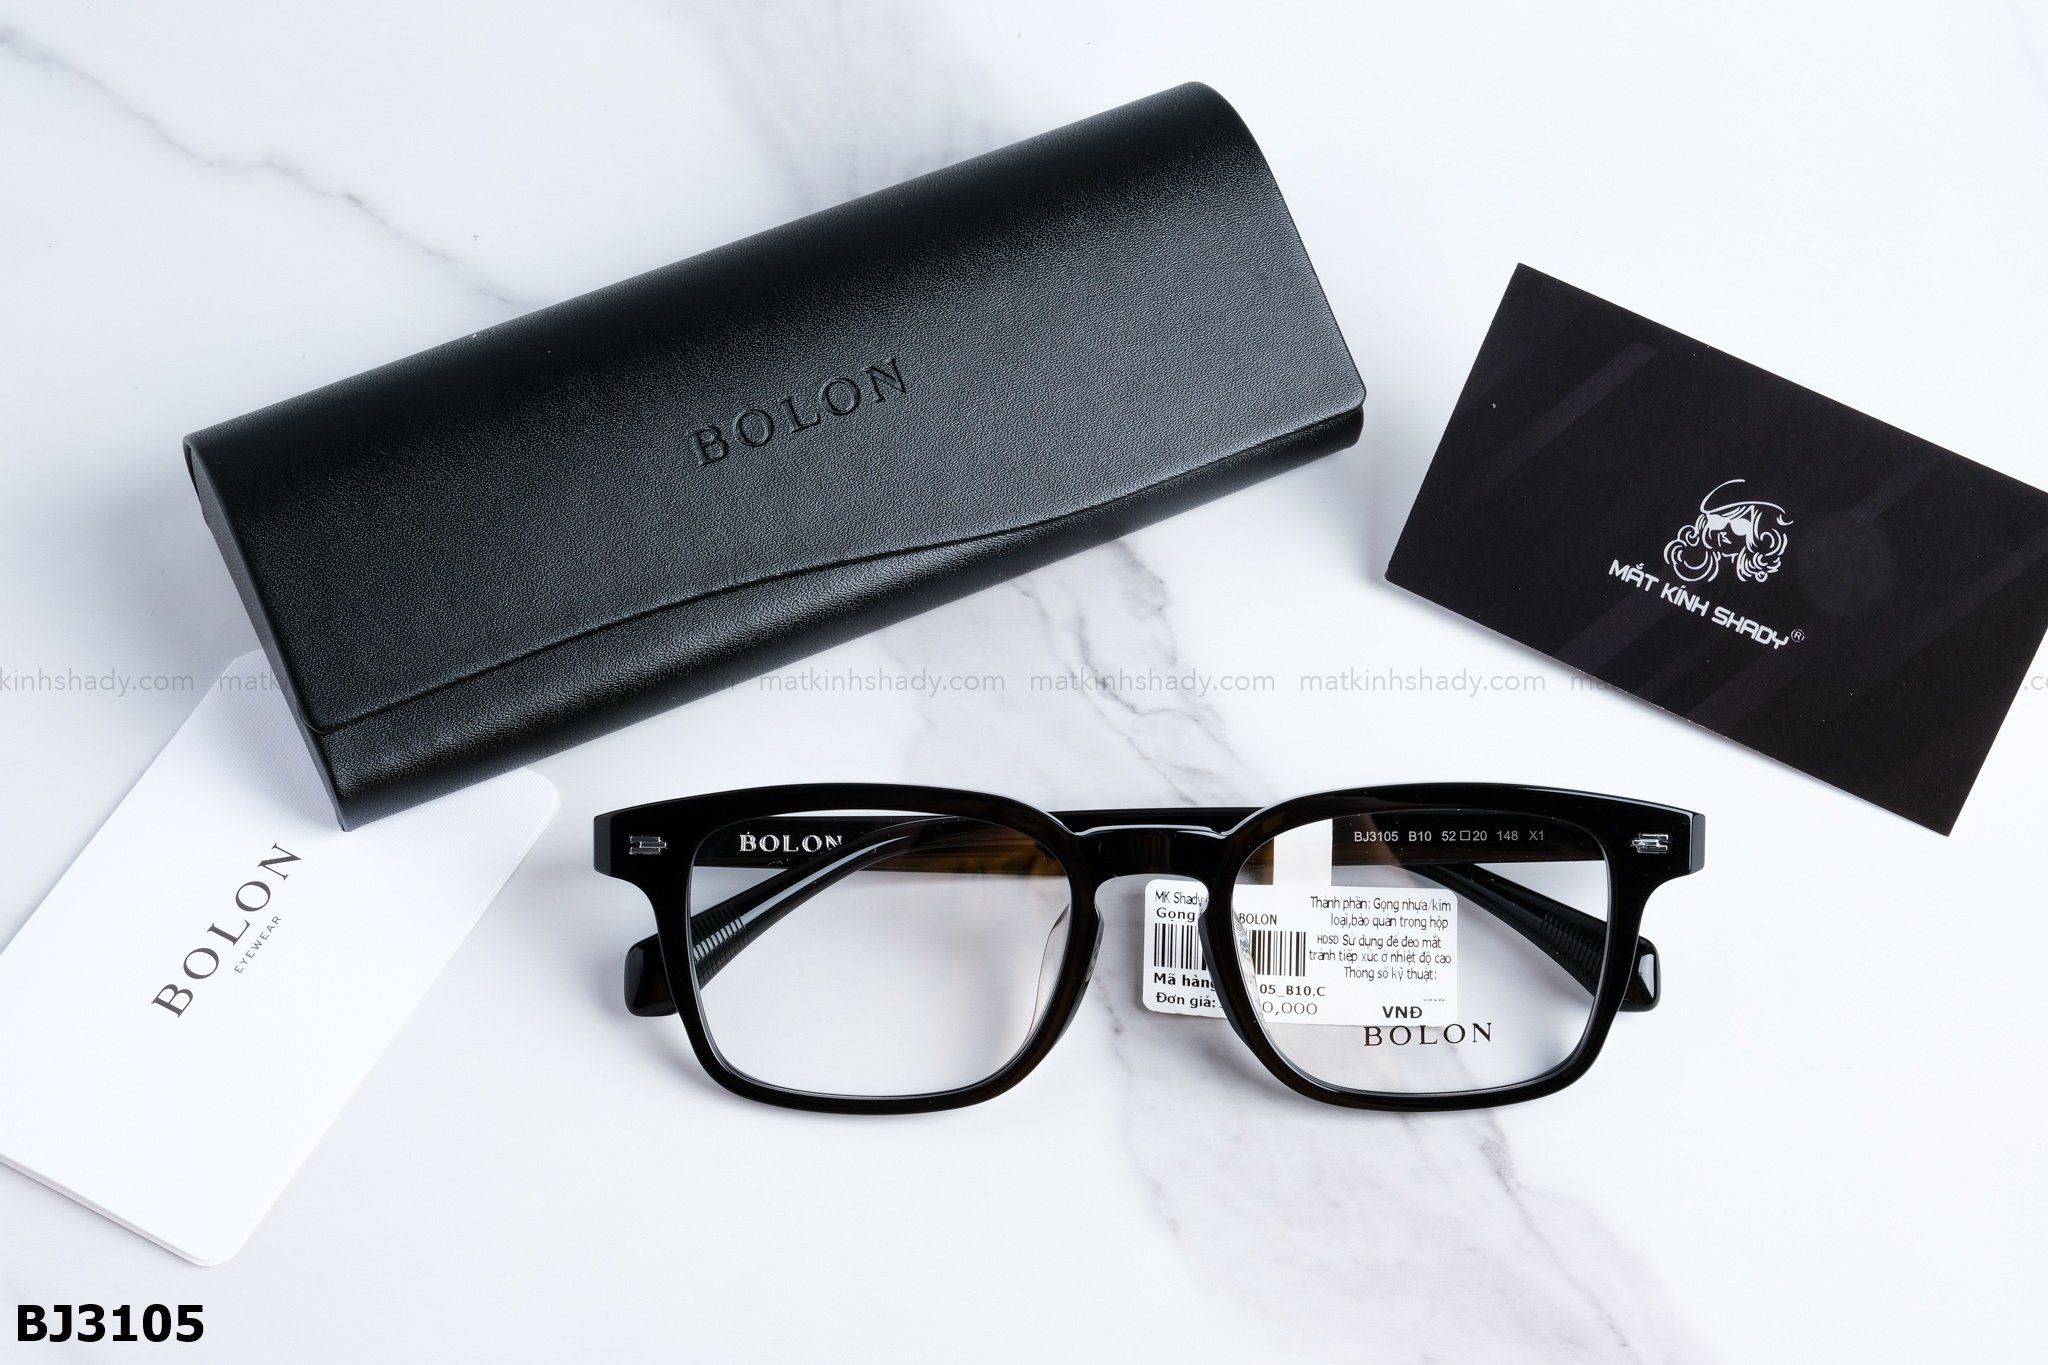  Bolon Eyewear - Glasses - BJ3105 